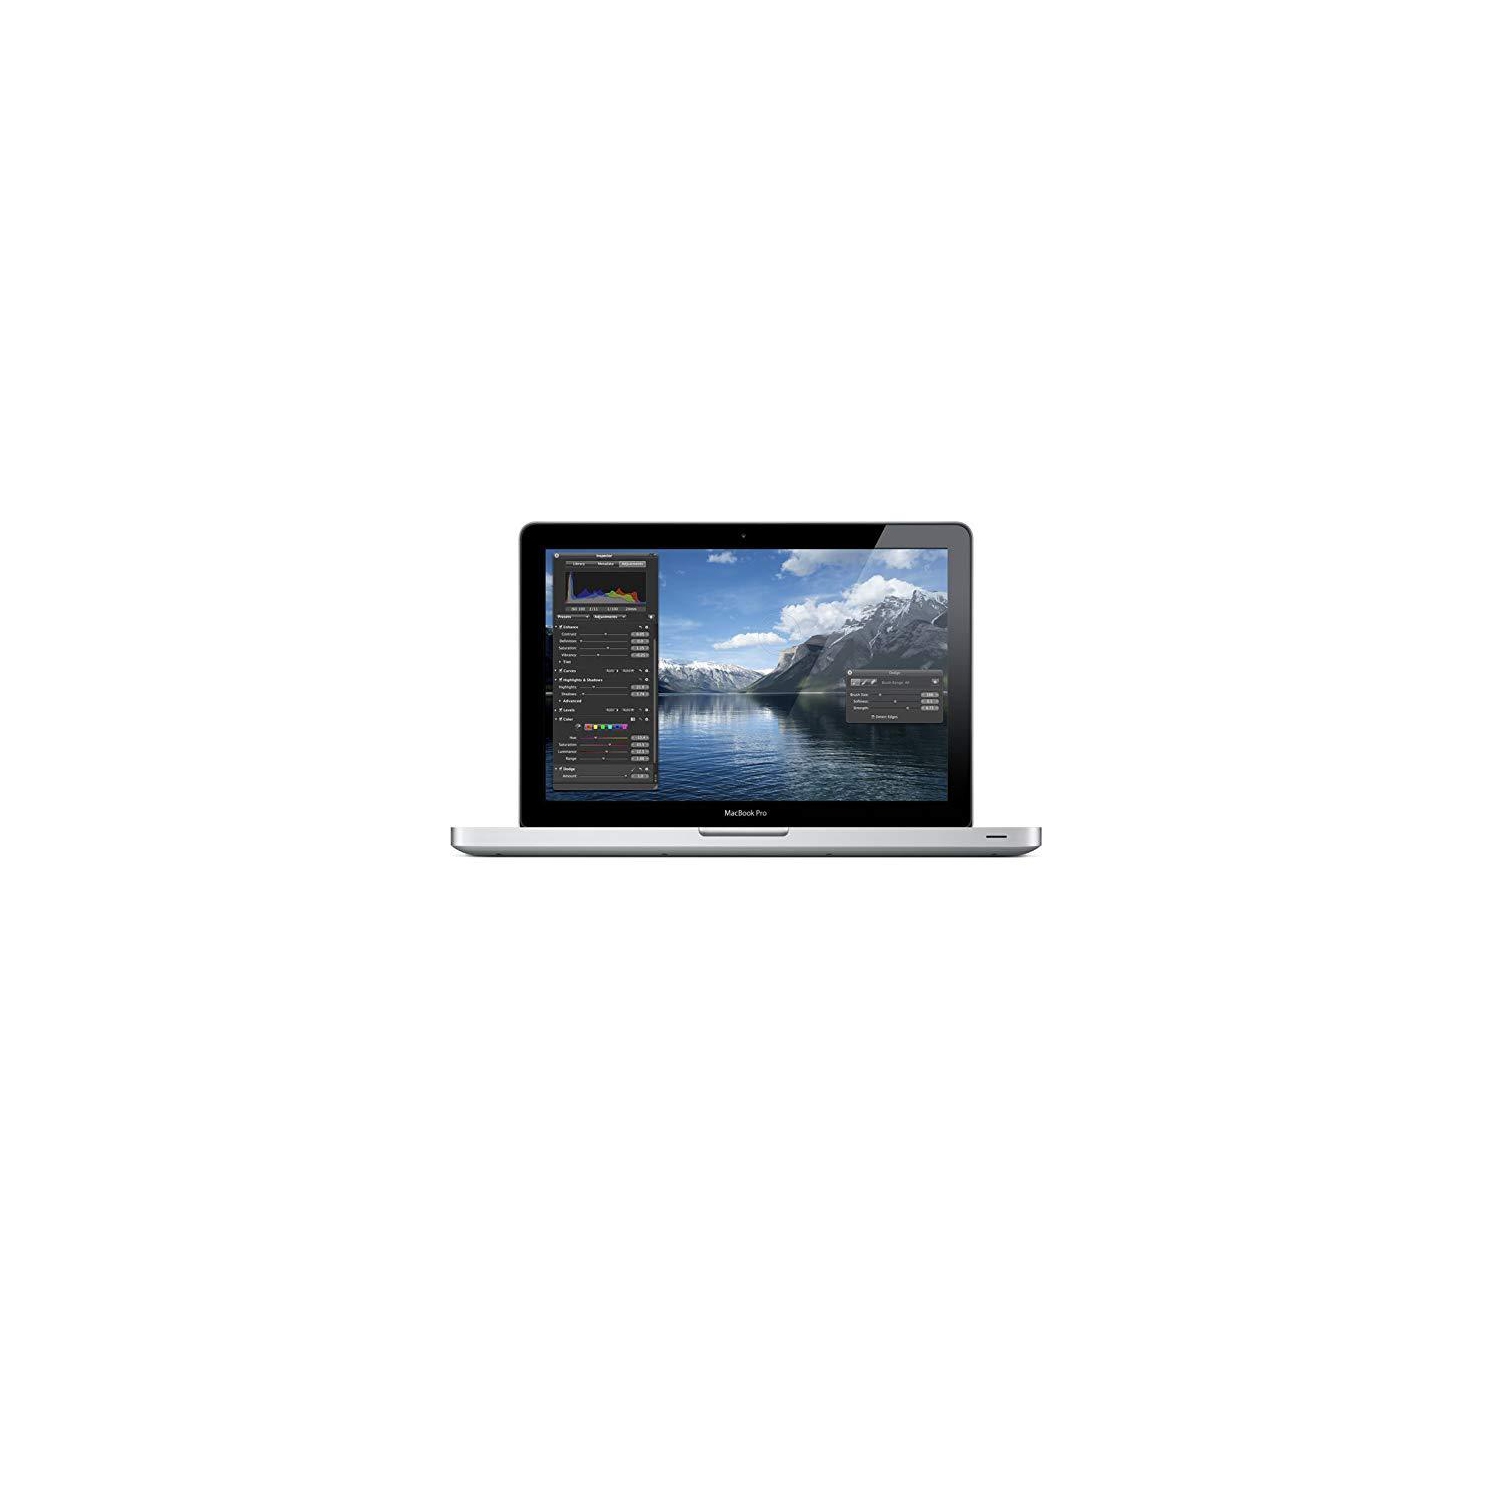 Refurbished (Good) - Apple Macbook Pro 13" Retina 2.4GHz Dual i5 8GB / 256GB 2013 Model